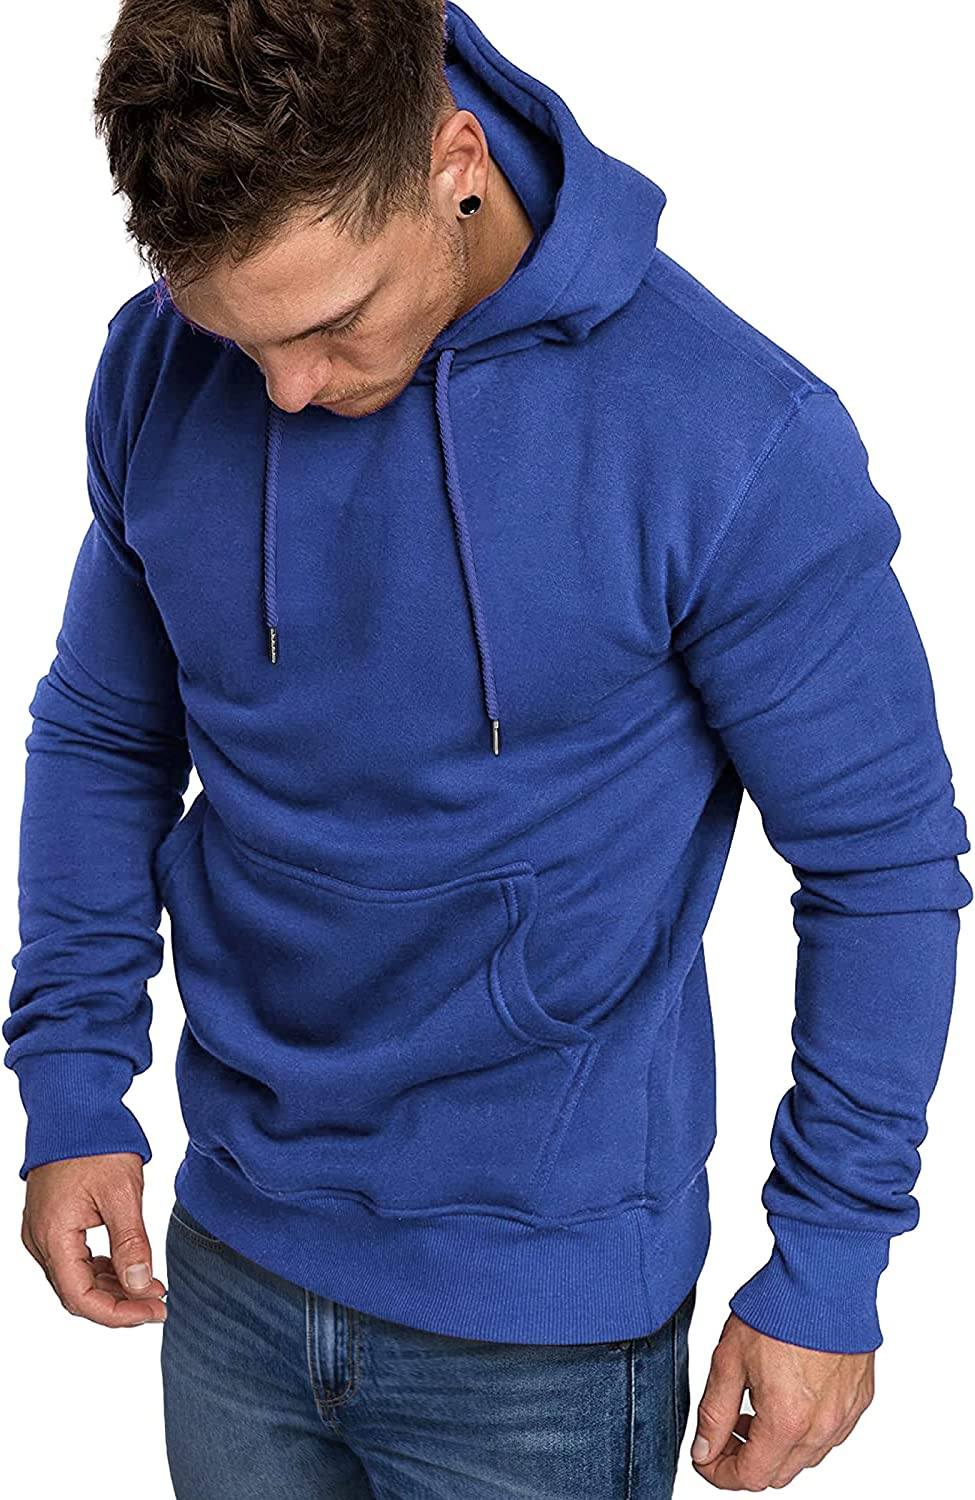 COOFANDY Men's Casual Hoodie Lightweight Long Sleeve Sports Hooded Sweatshirts Hoodies COOFANDY Store Small Royal Blue 